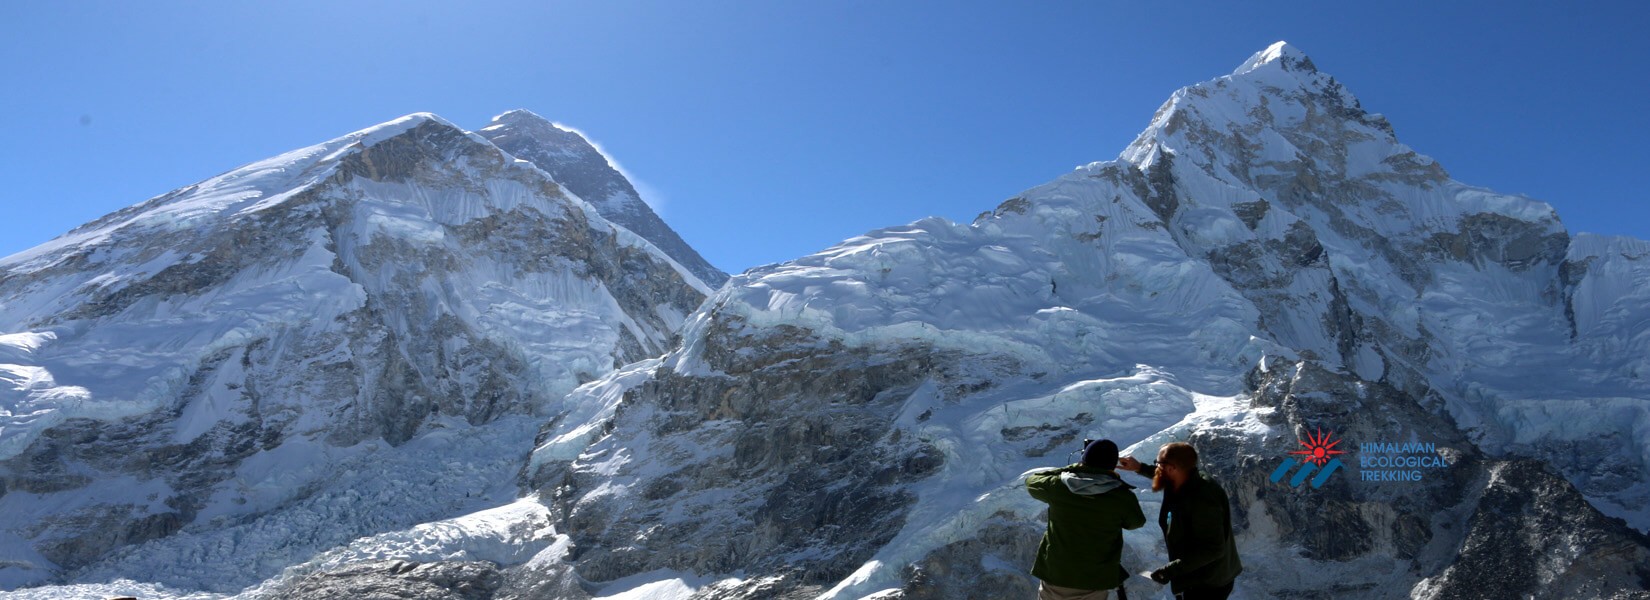 Everest Base Camp Trek - 12 days